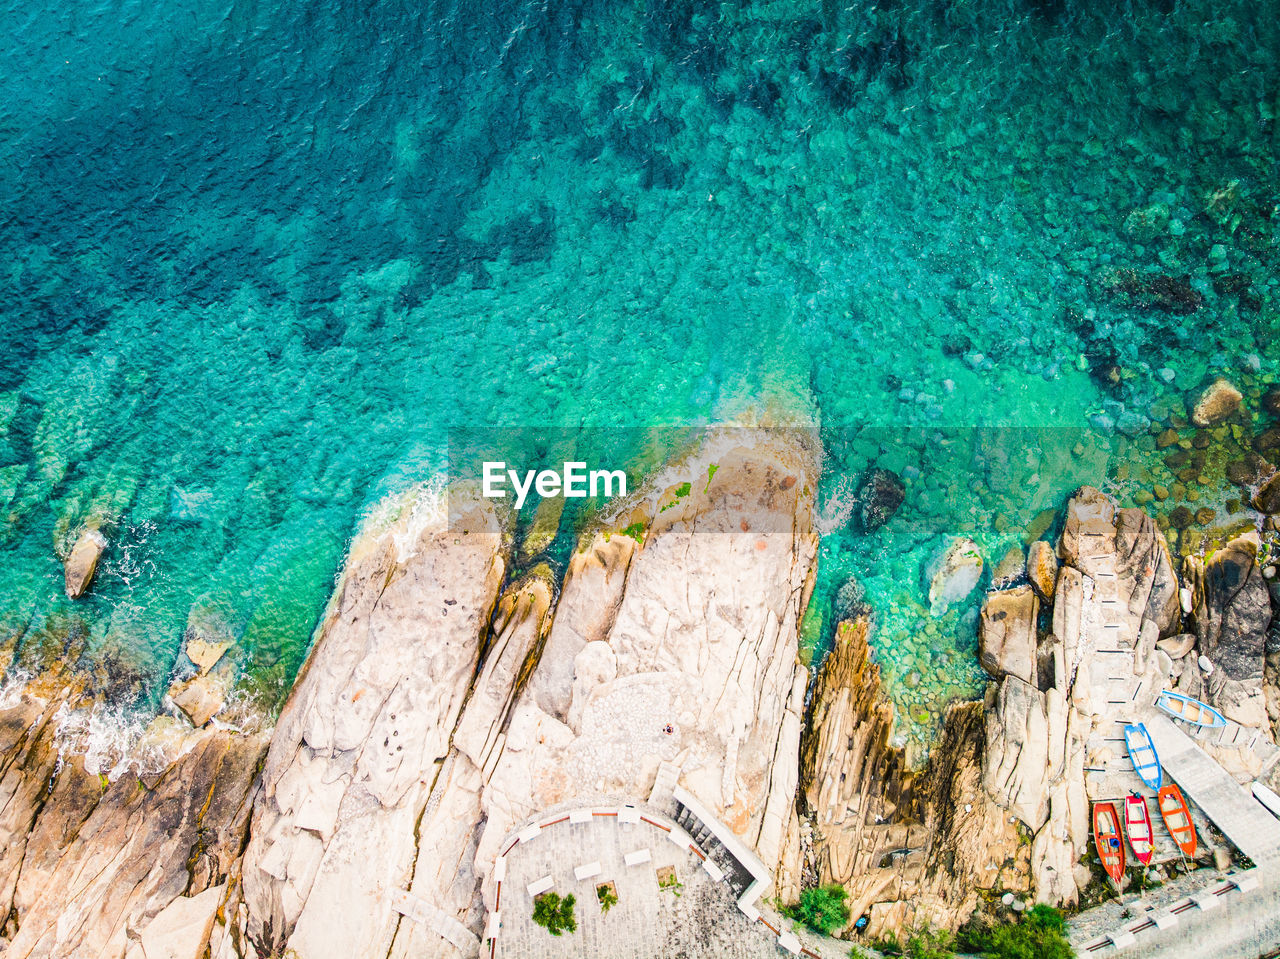 Rocky shore and the sea - drone shot